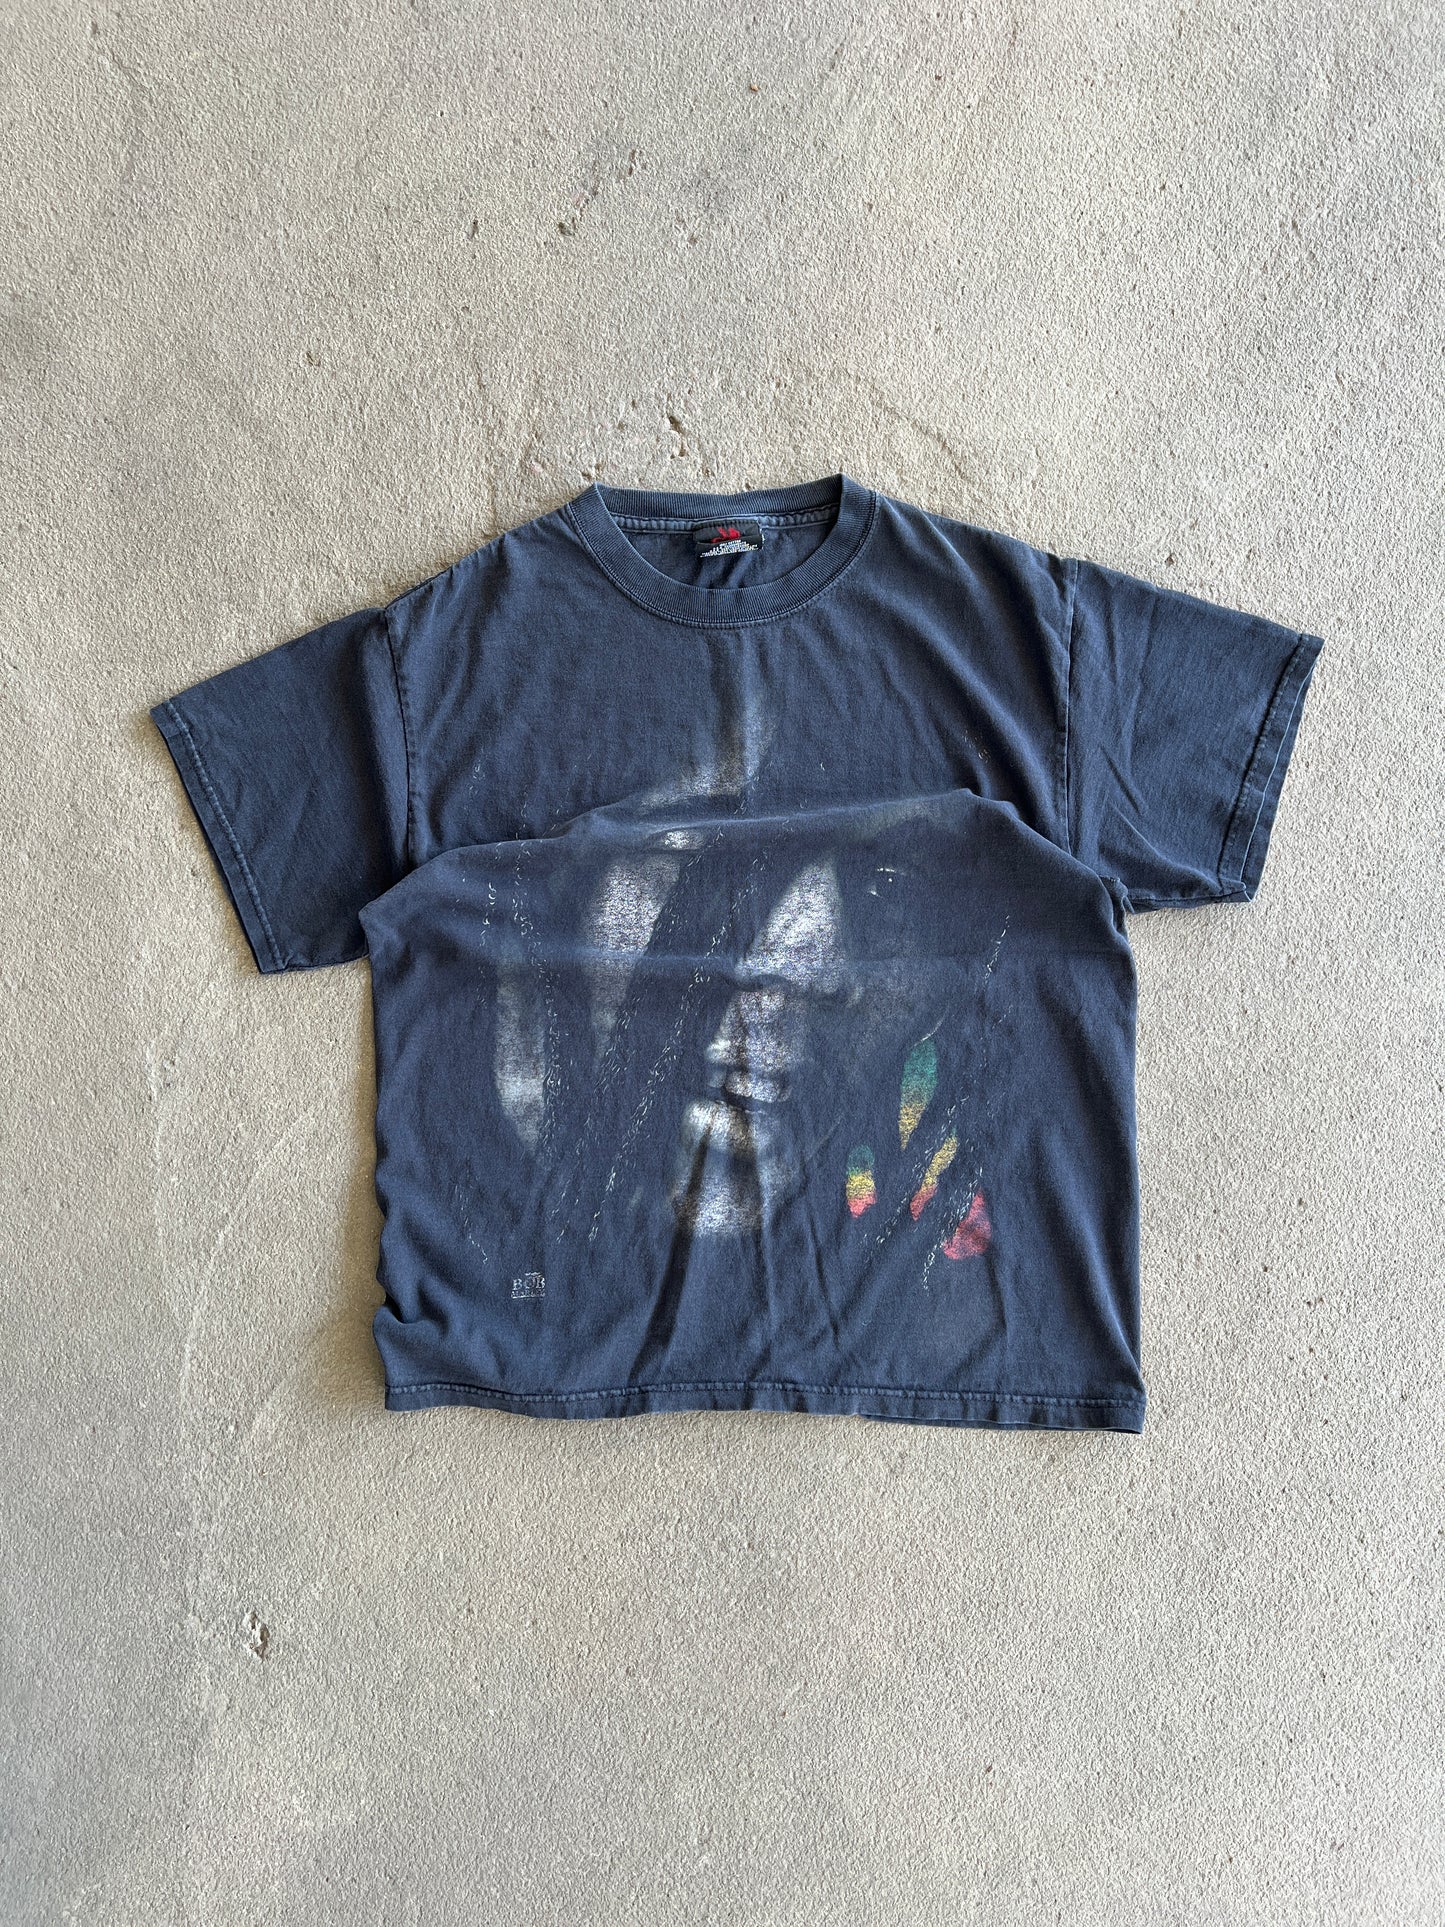 Vintage Faded Bob Marley Shirt - S